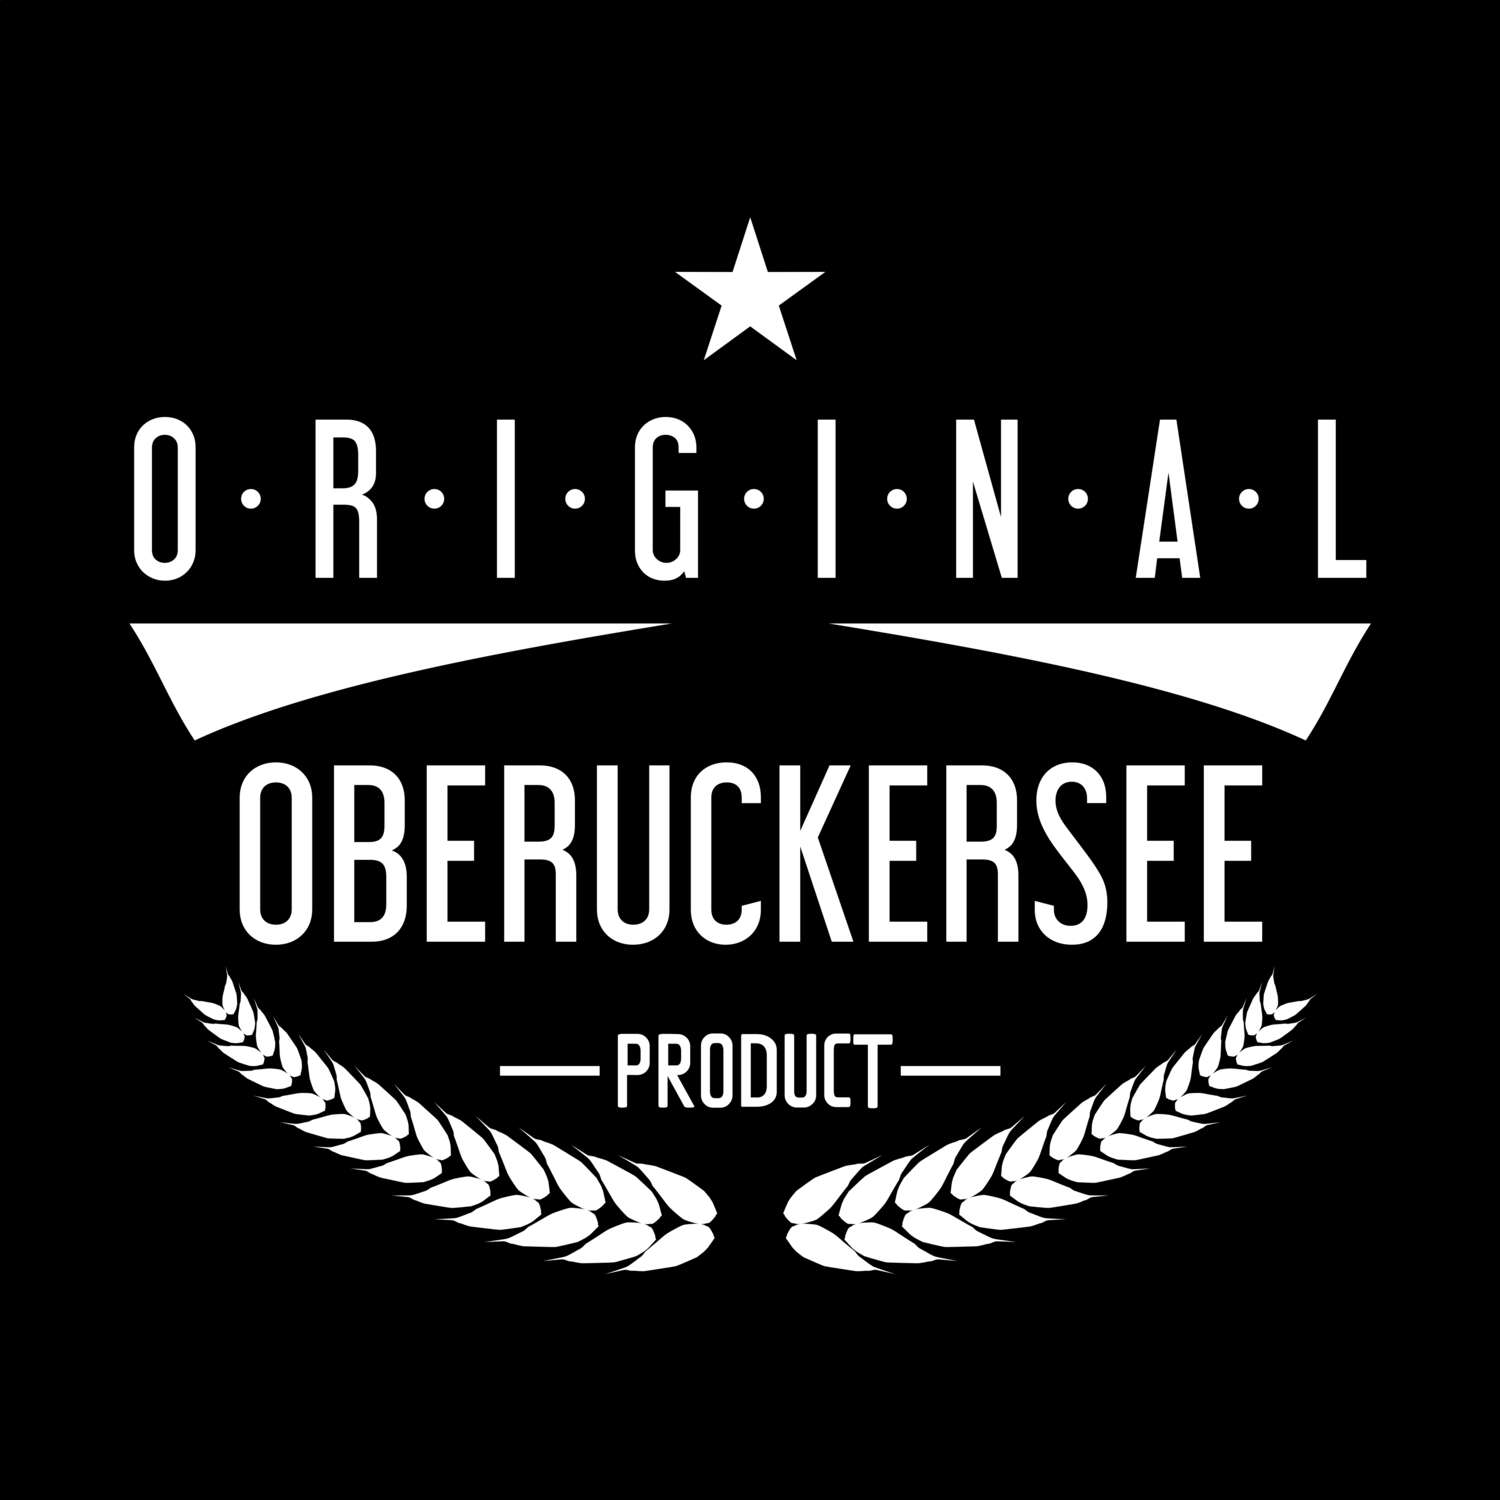 Oberuckersee T-Shirt »Original Product«